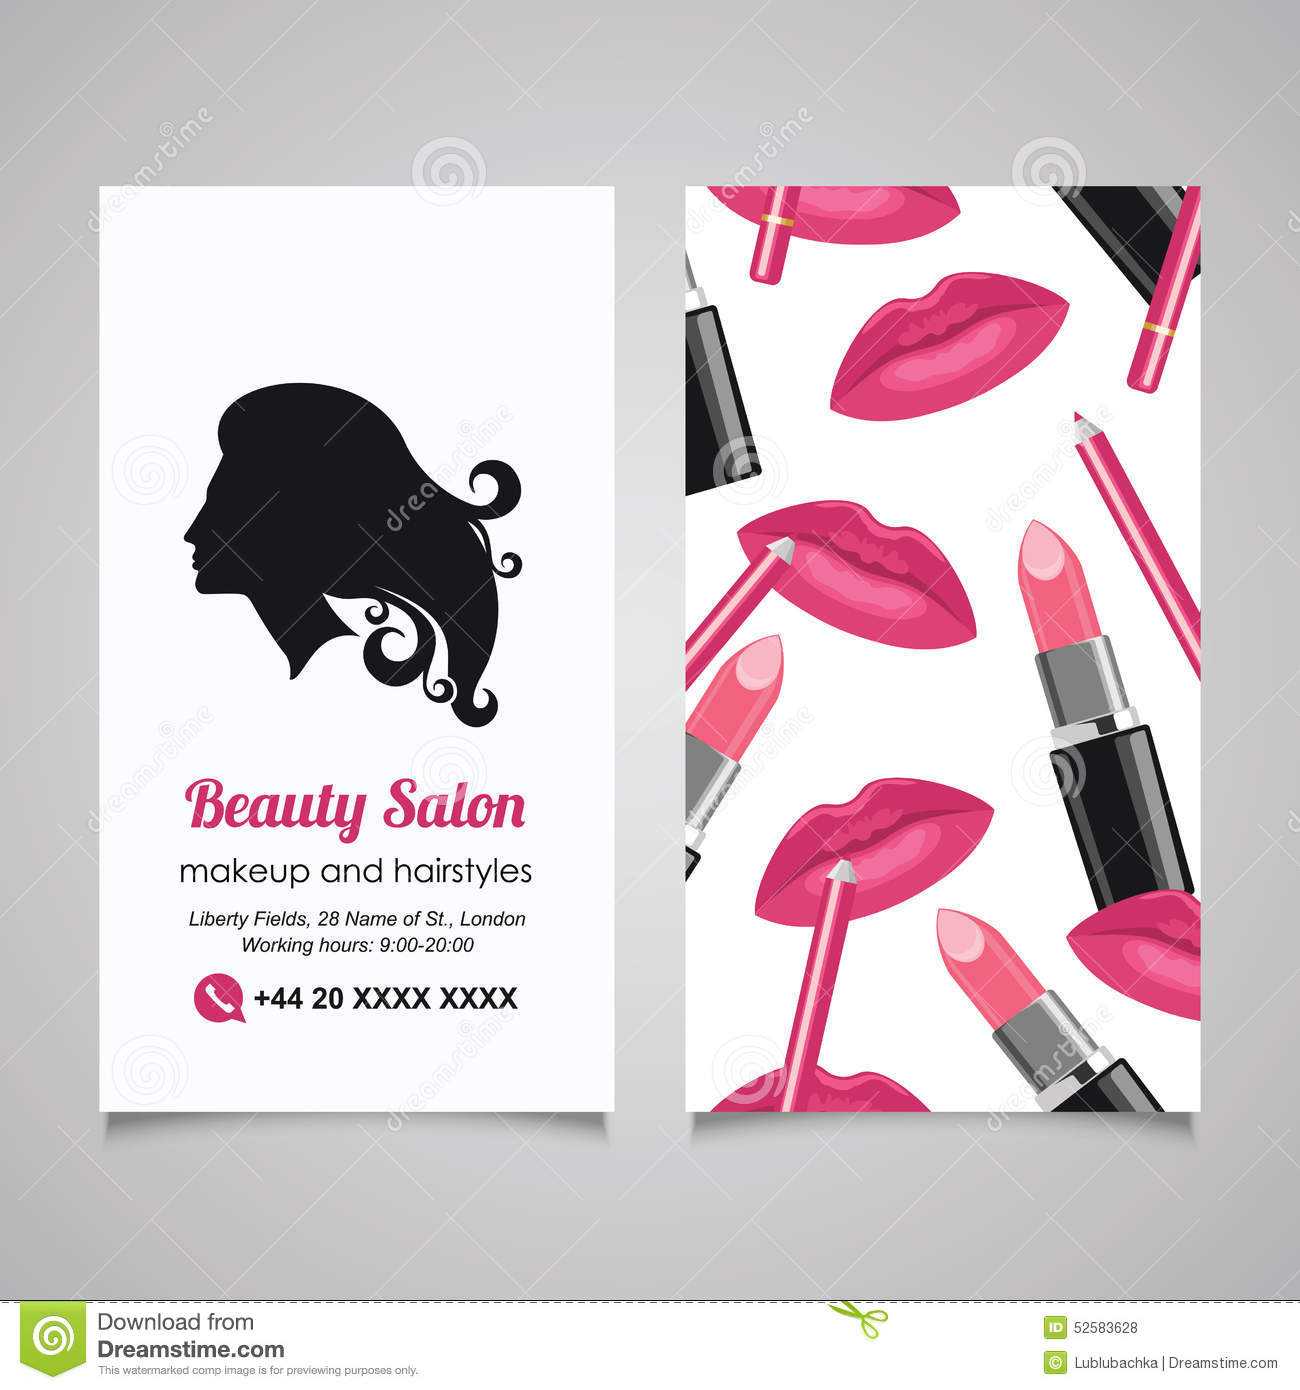 Beauty Salon Business Card Design Template With Beautiful With Hair Salon Business Card Template